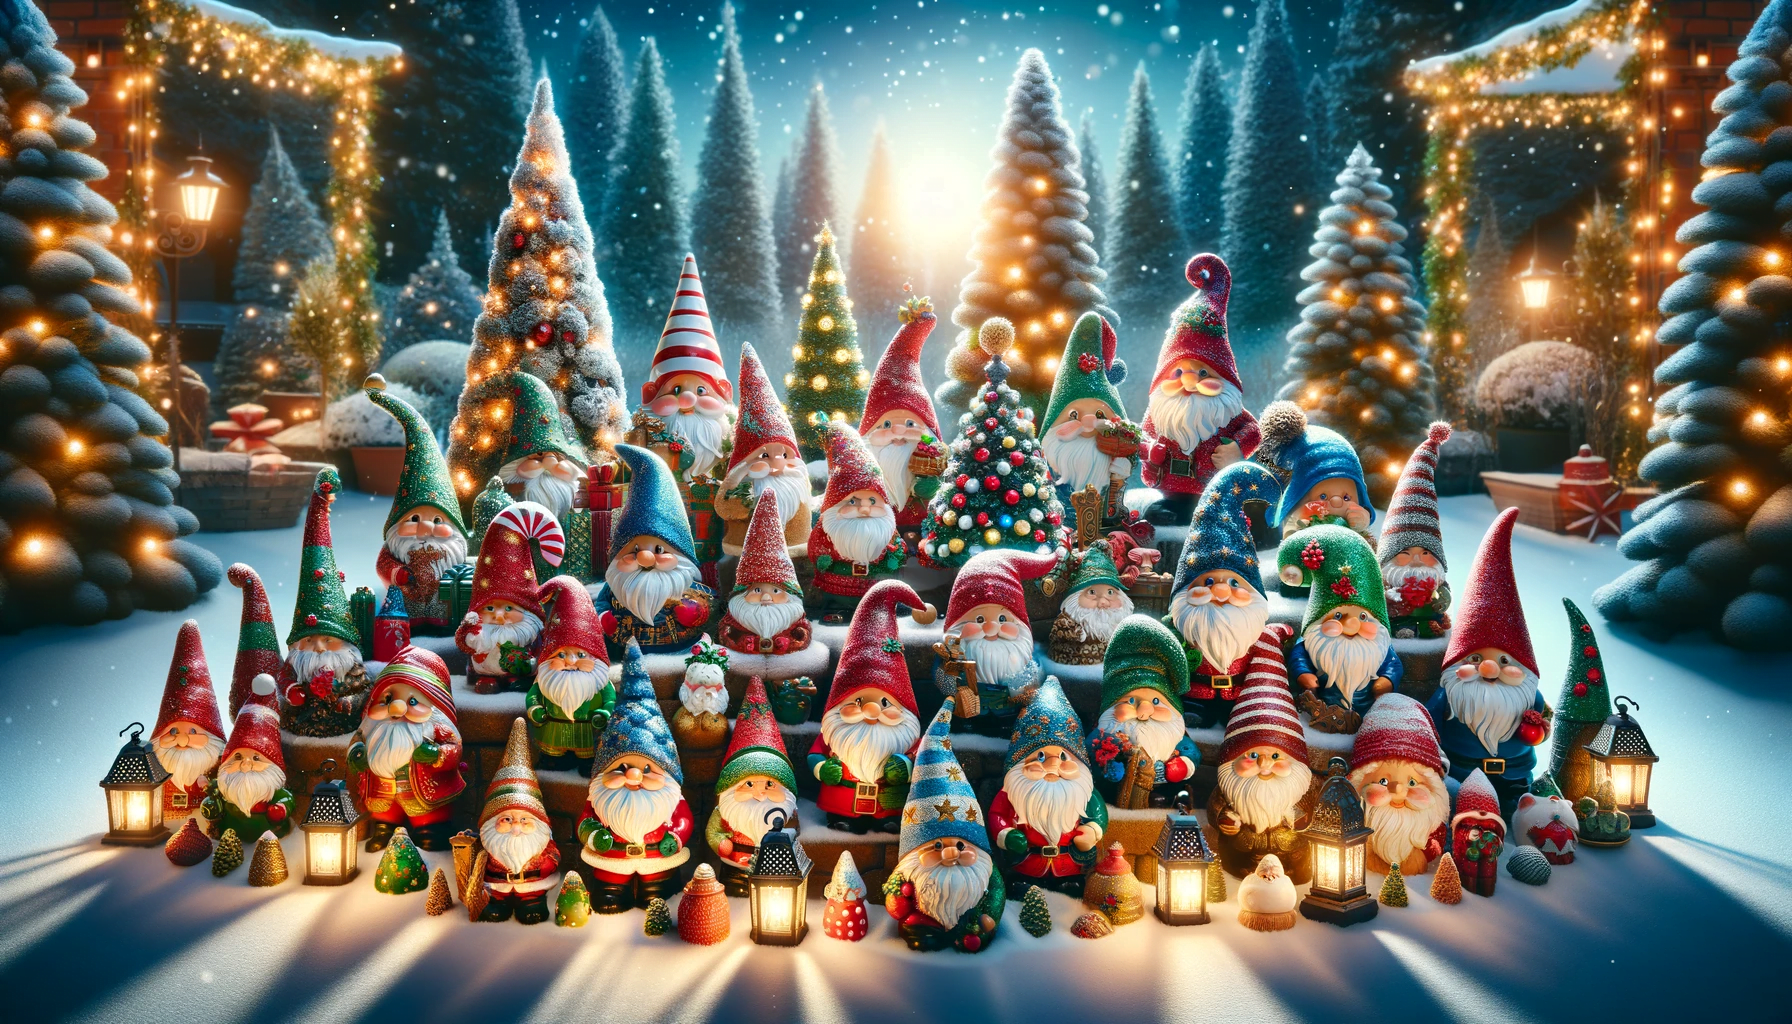 Outdoor Christmas Gnomes,outdoor christmas gnomes diy,outdoor xmas gnomes,outdoor christmas gnome light,outdoor christmas gnome statue,led christmas gnomes